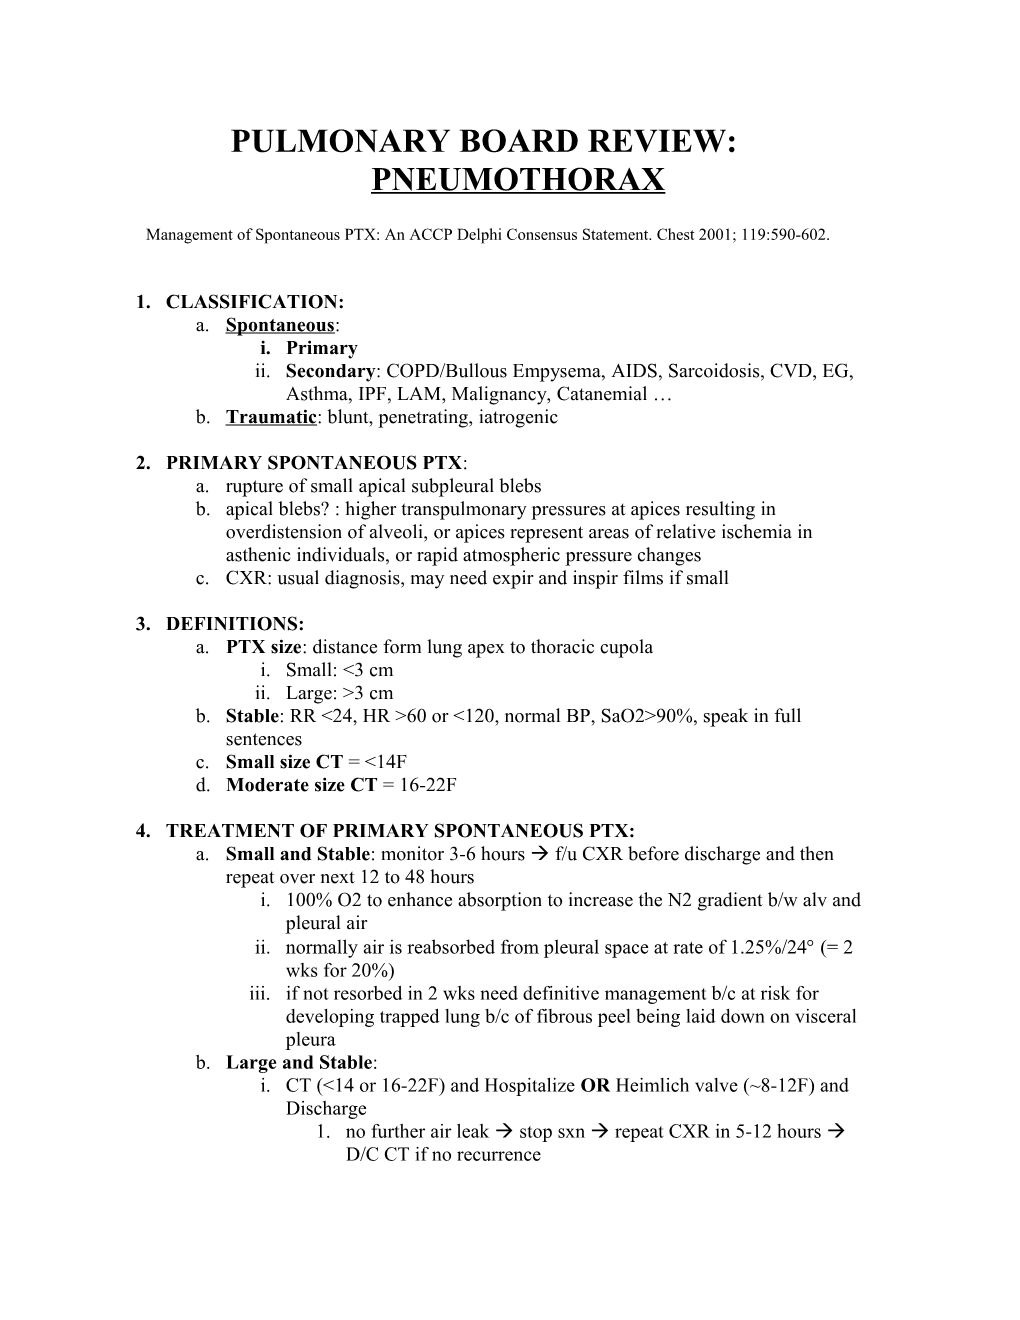 Pulmonary Board Review: Pneumothorax